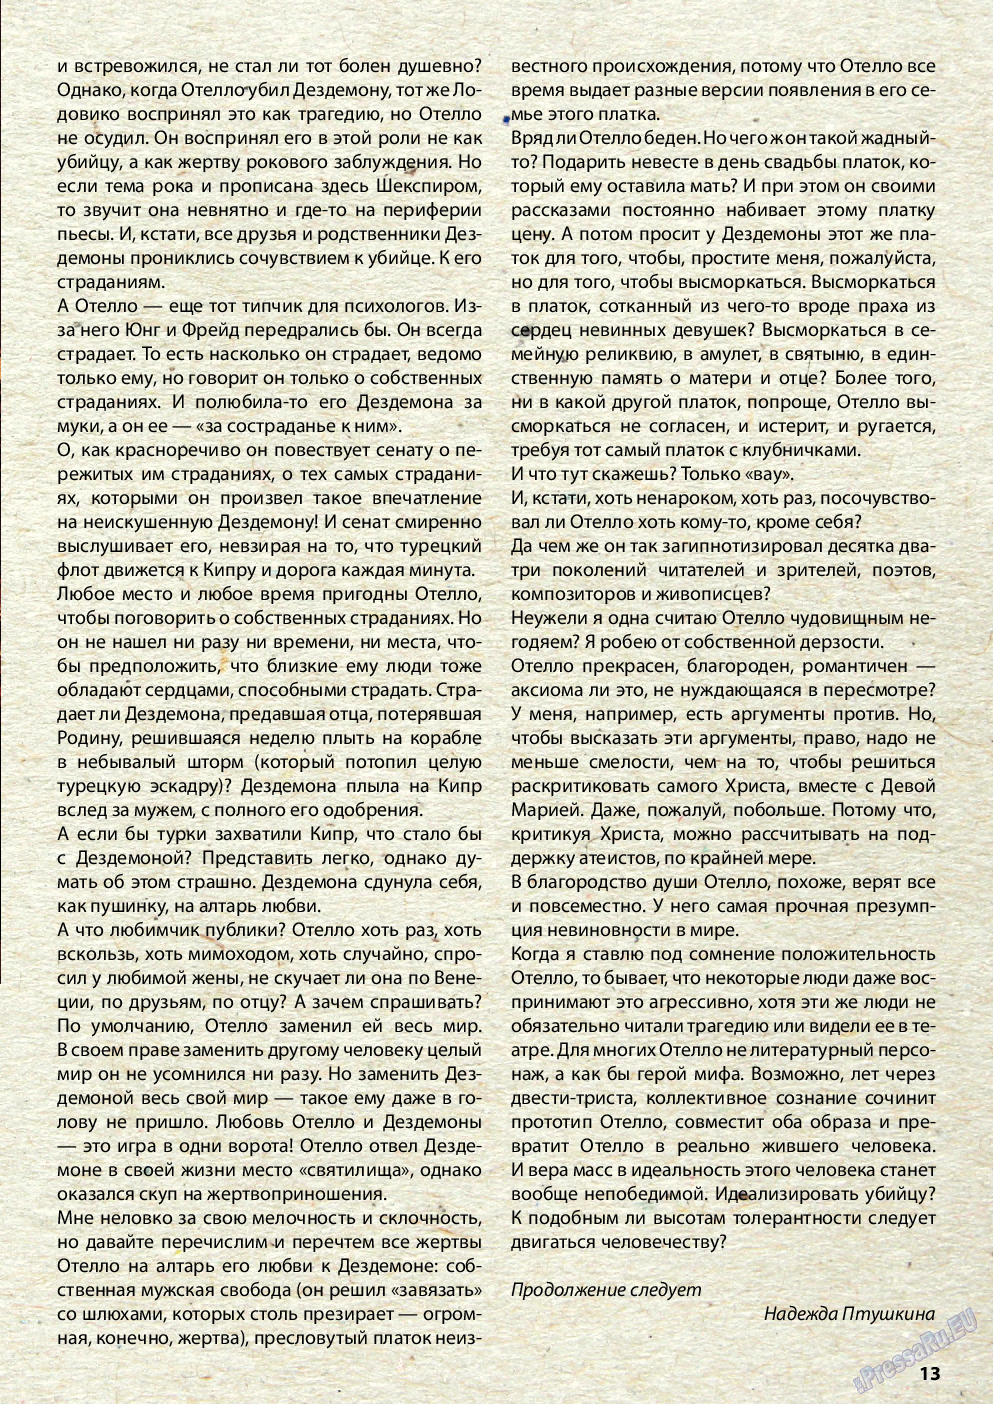 Wadim, журнал. 2014 №5 стр.13